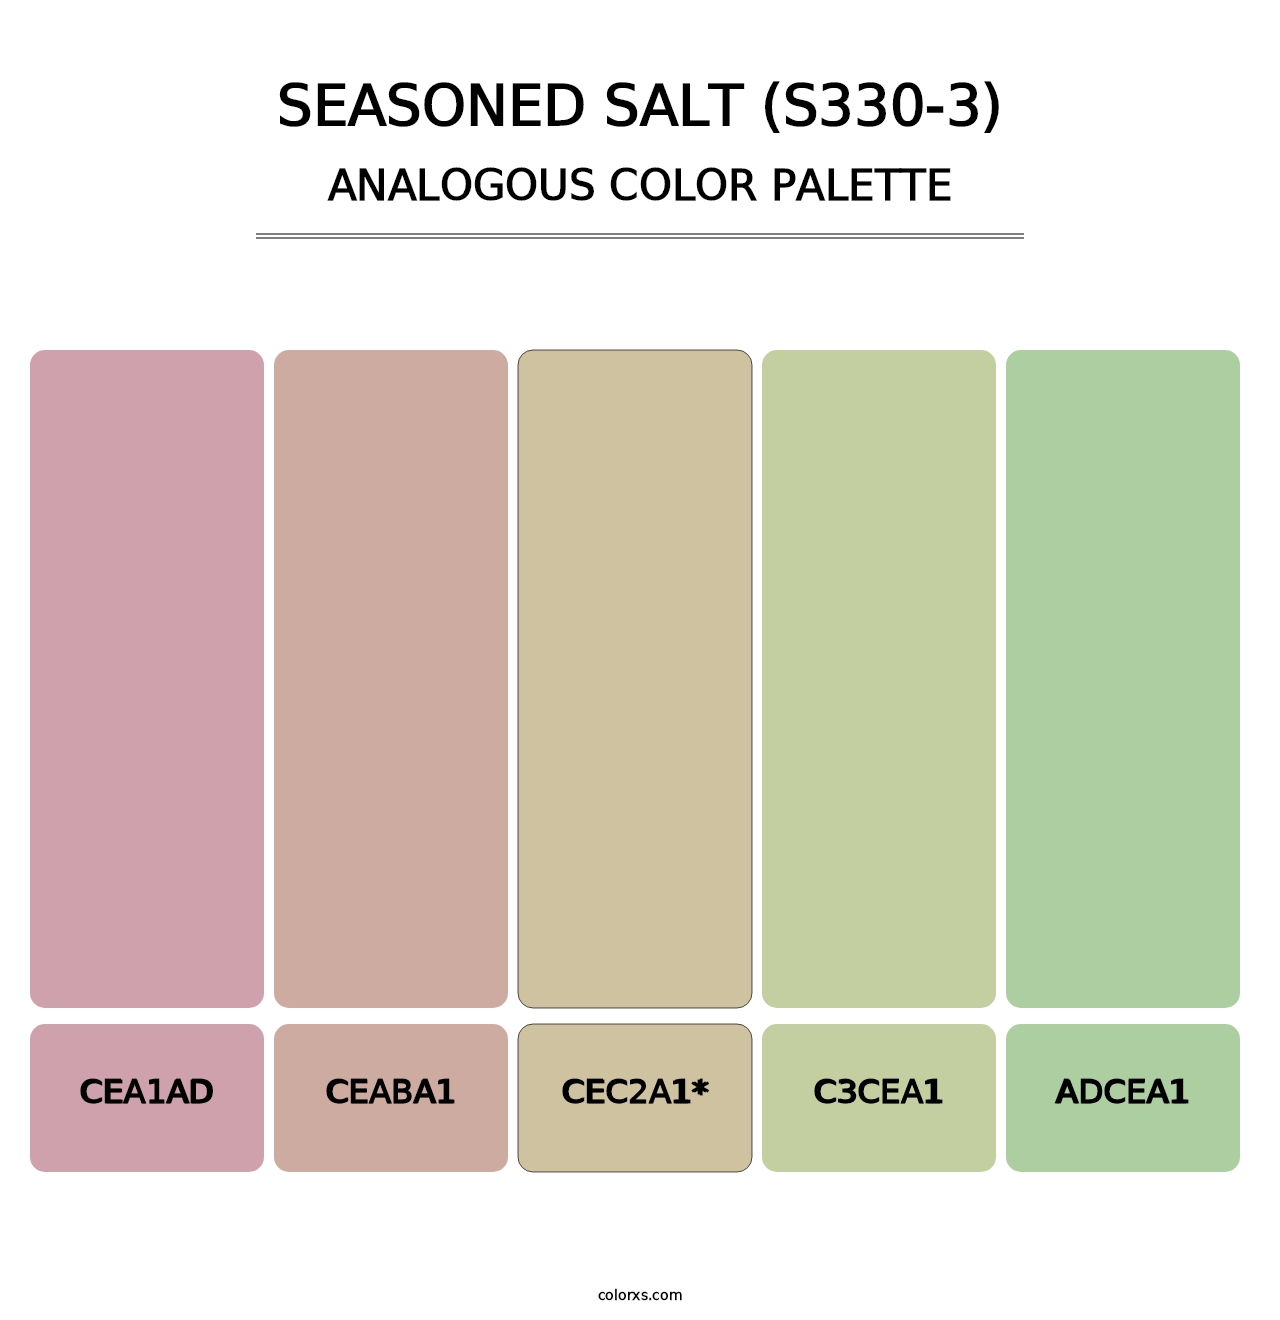 Seasoned Salt (S330-3) - Analogous Color Palette